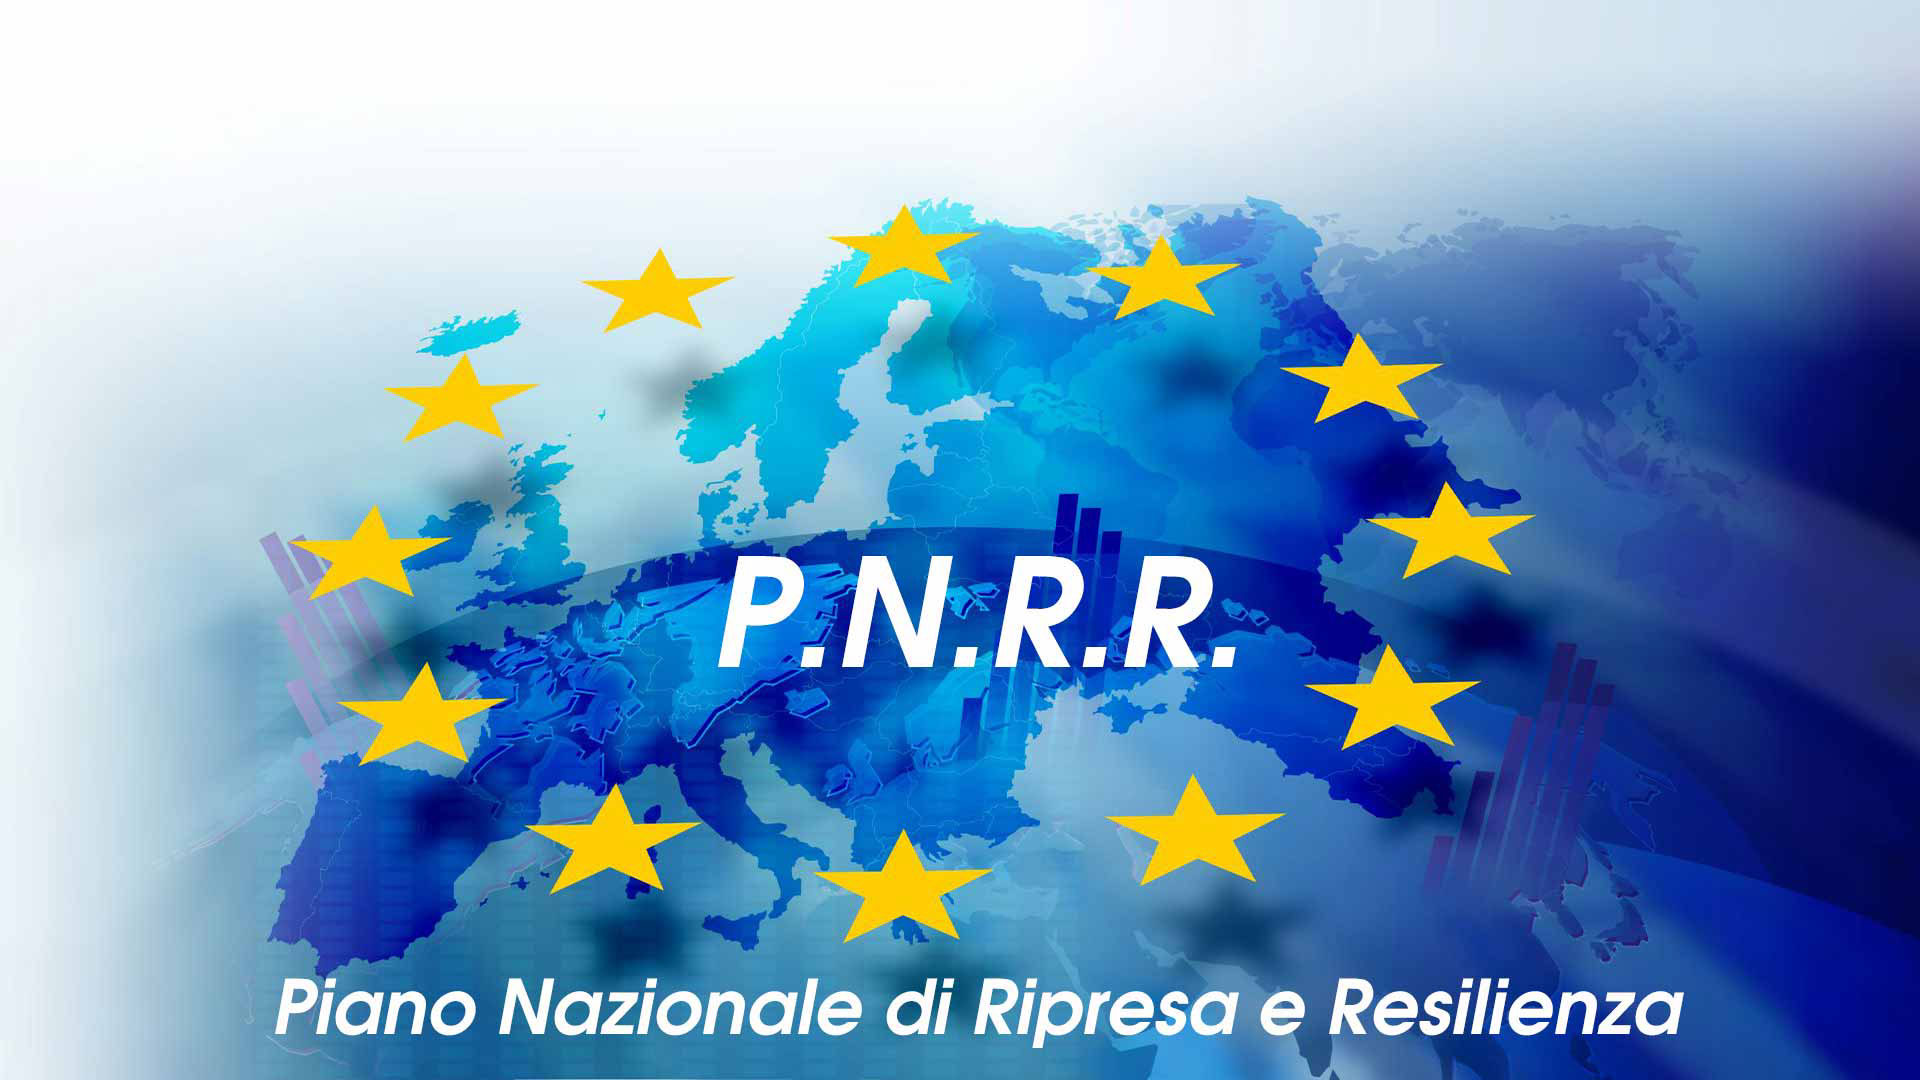 PNRR Next Generation EU 200 small 1080 v2